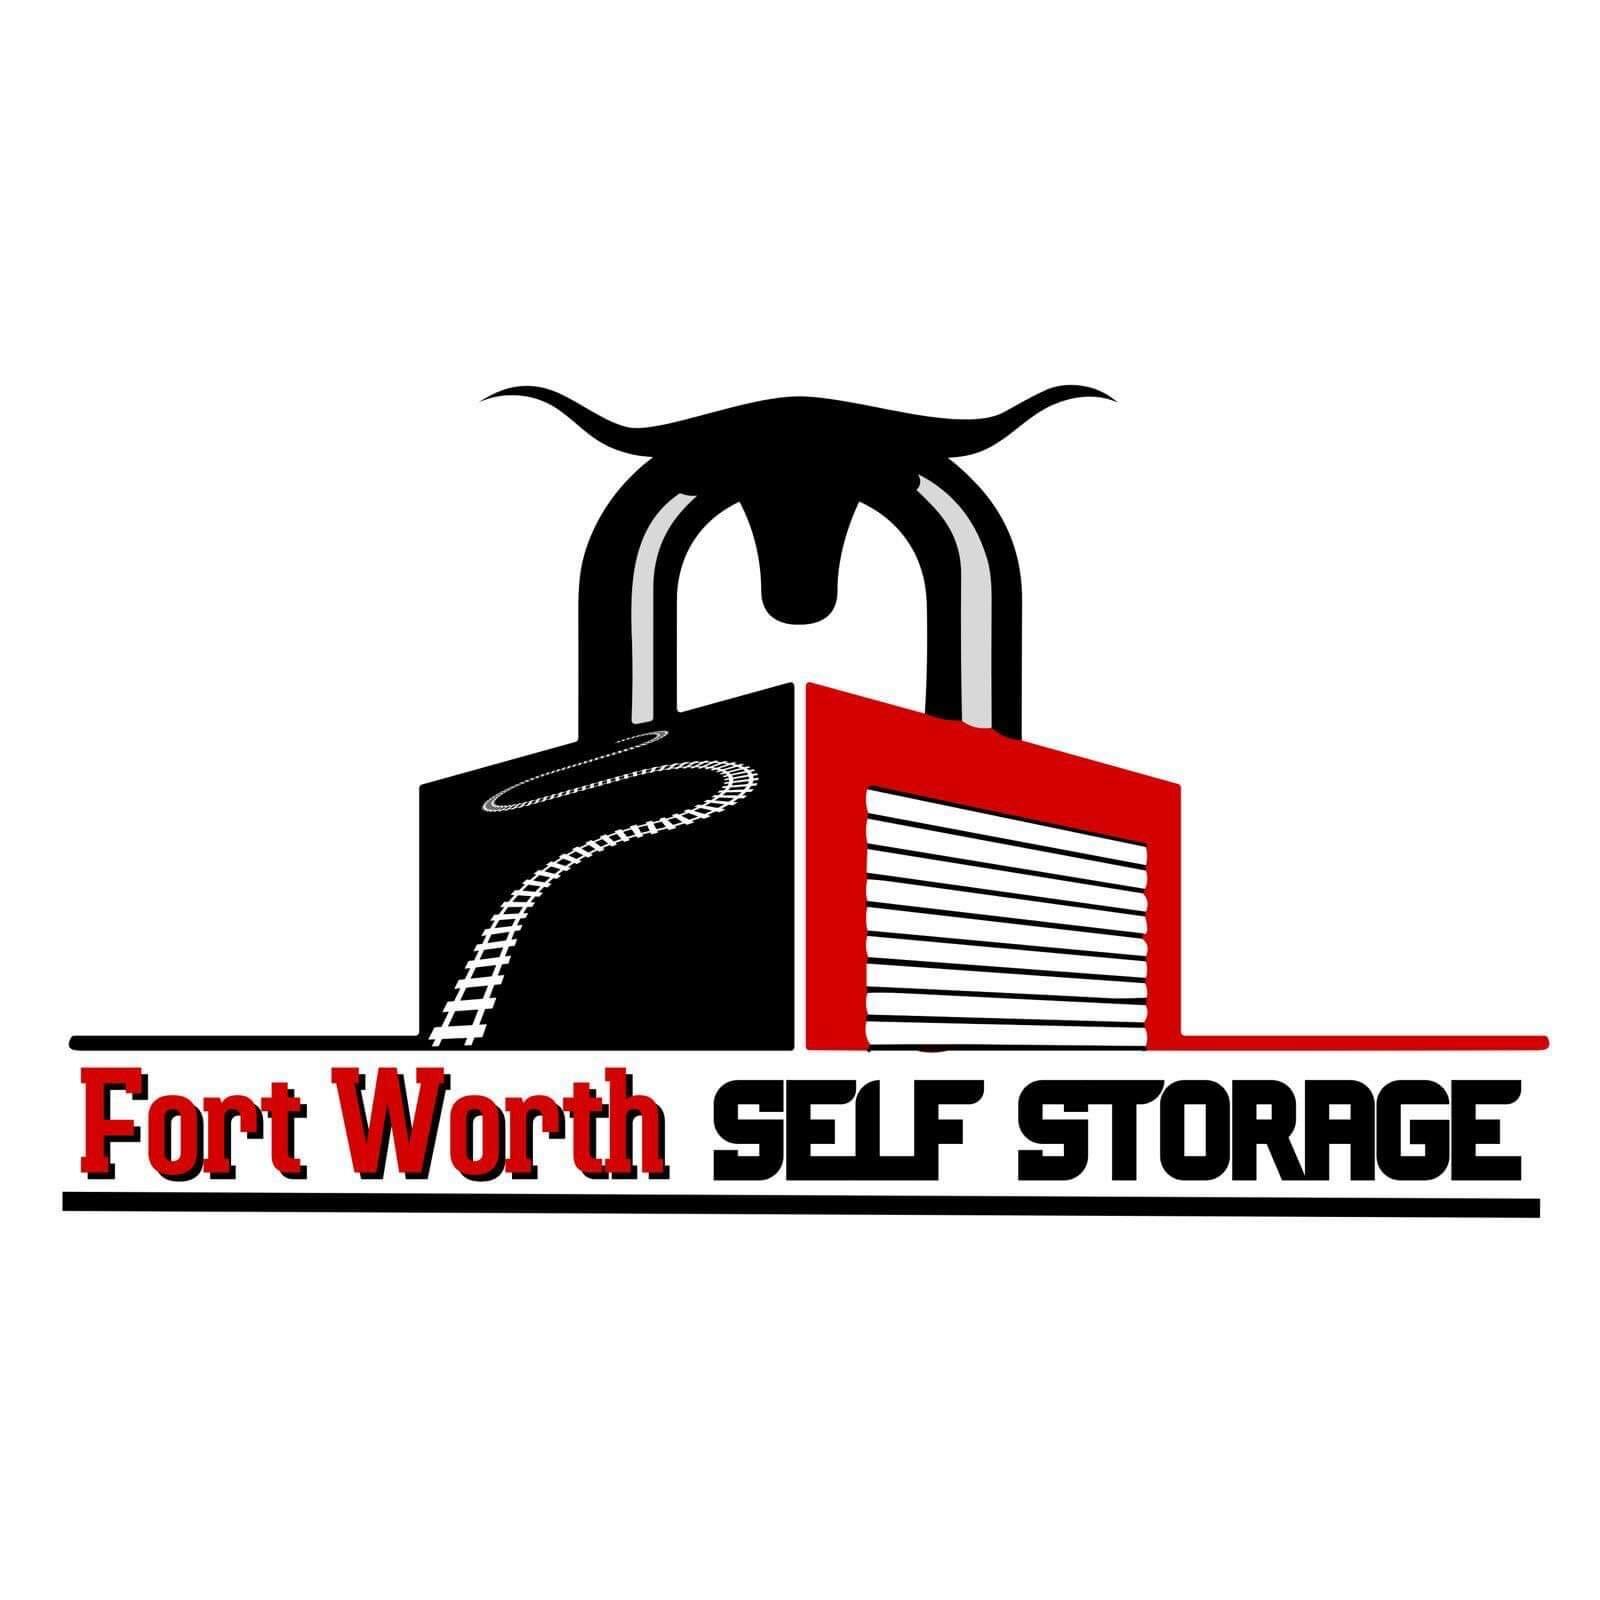 Fort Worth Self Storage